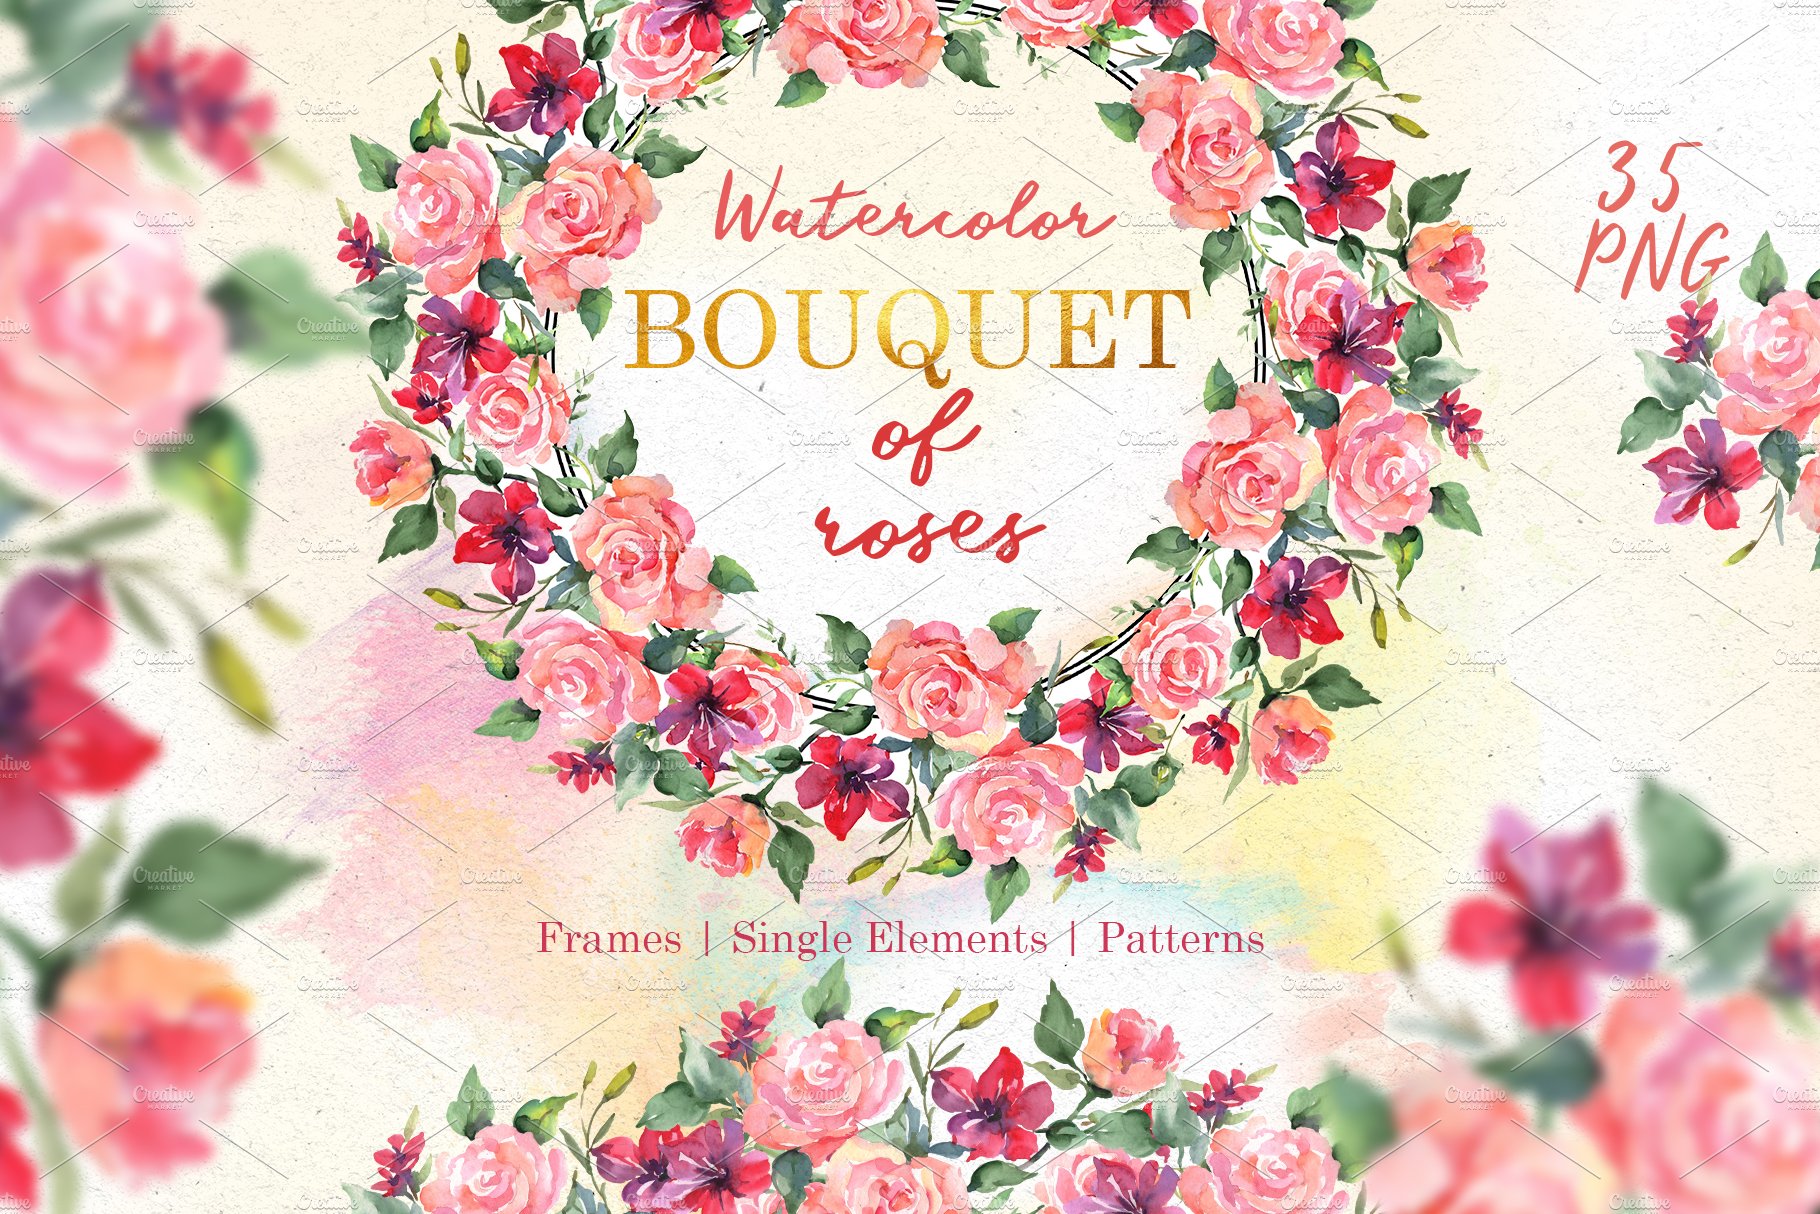 手绘粉红玛瑙玫瑰花花束水彩PNG画集 Bouquet With Watercolor Agate Roses插图